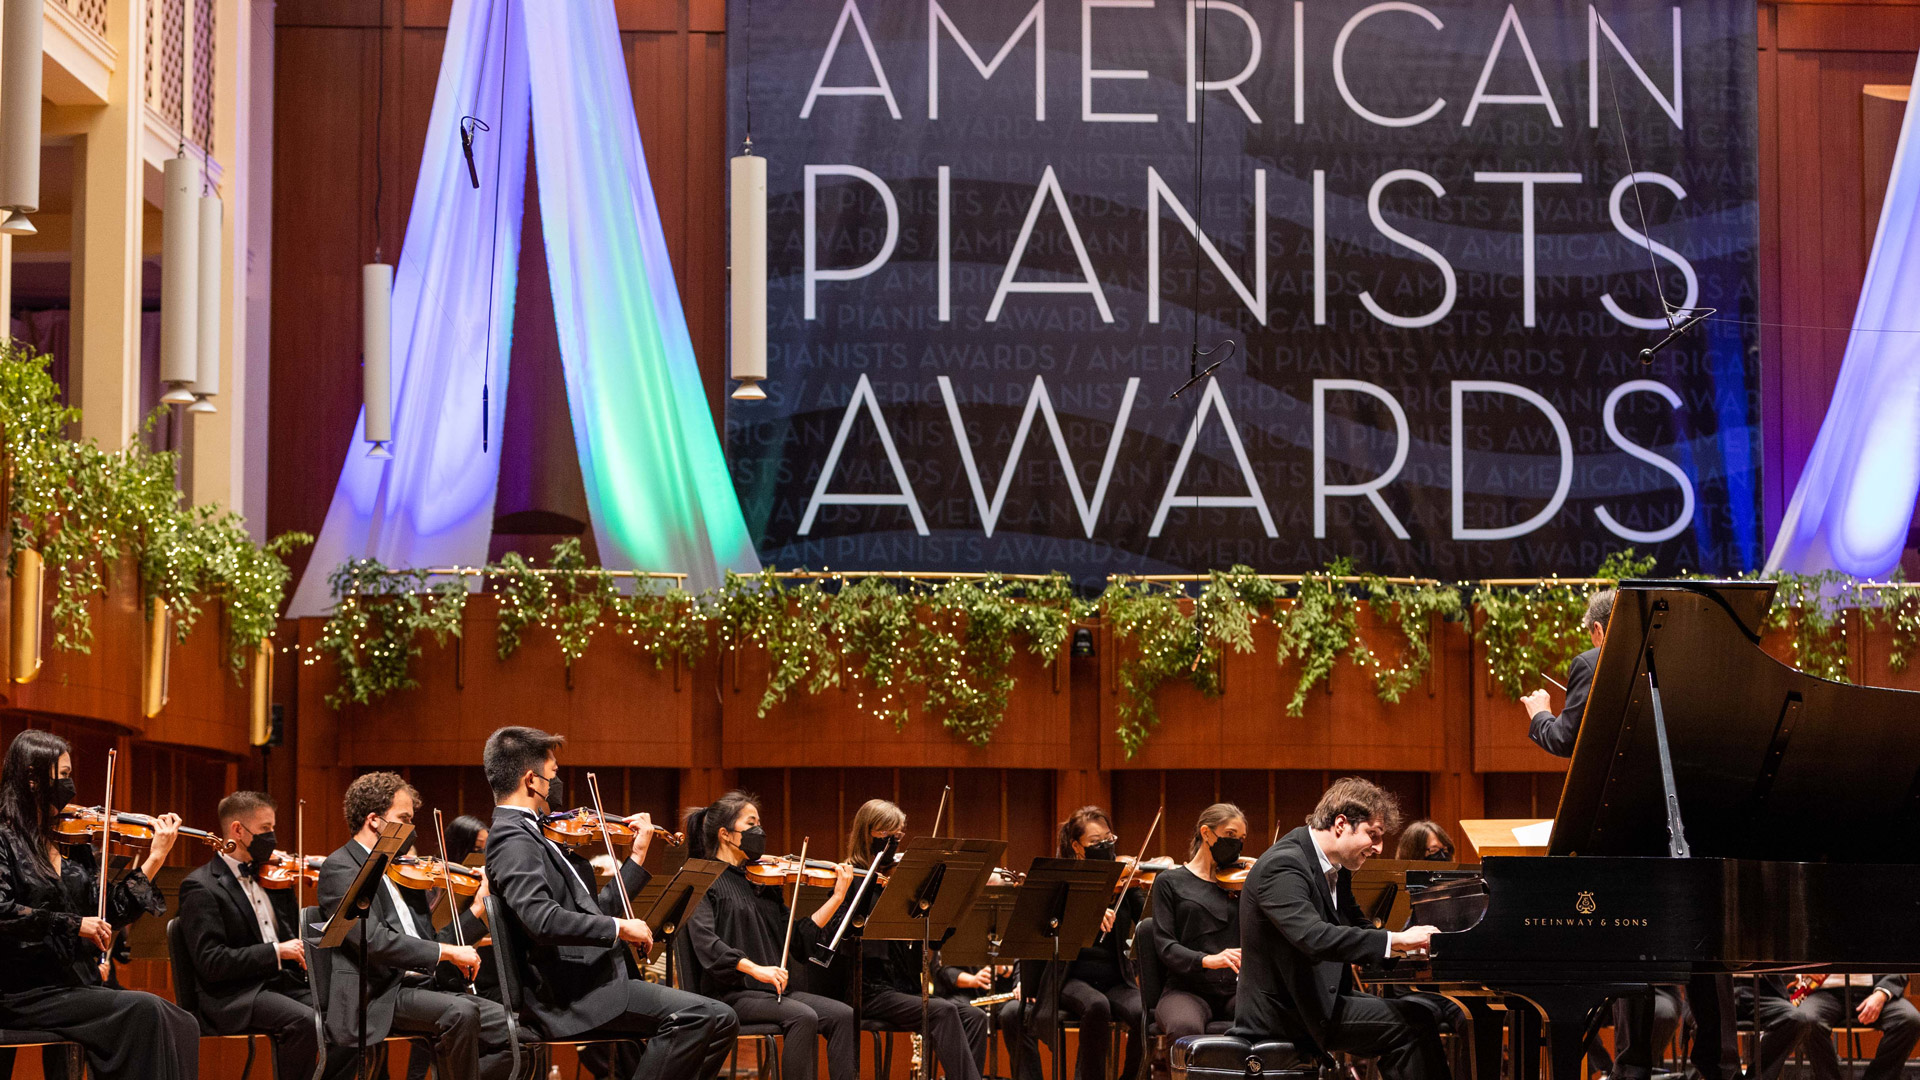 American Pianists Association